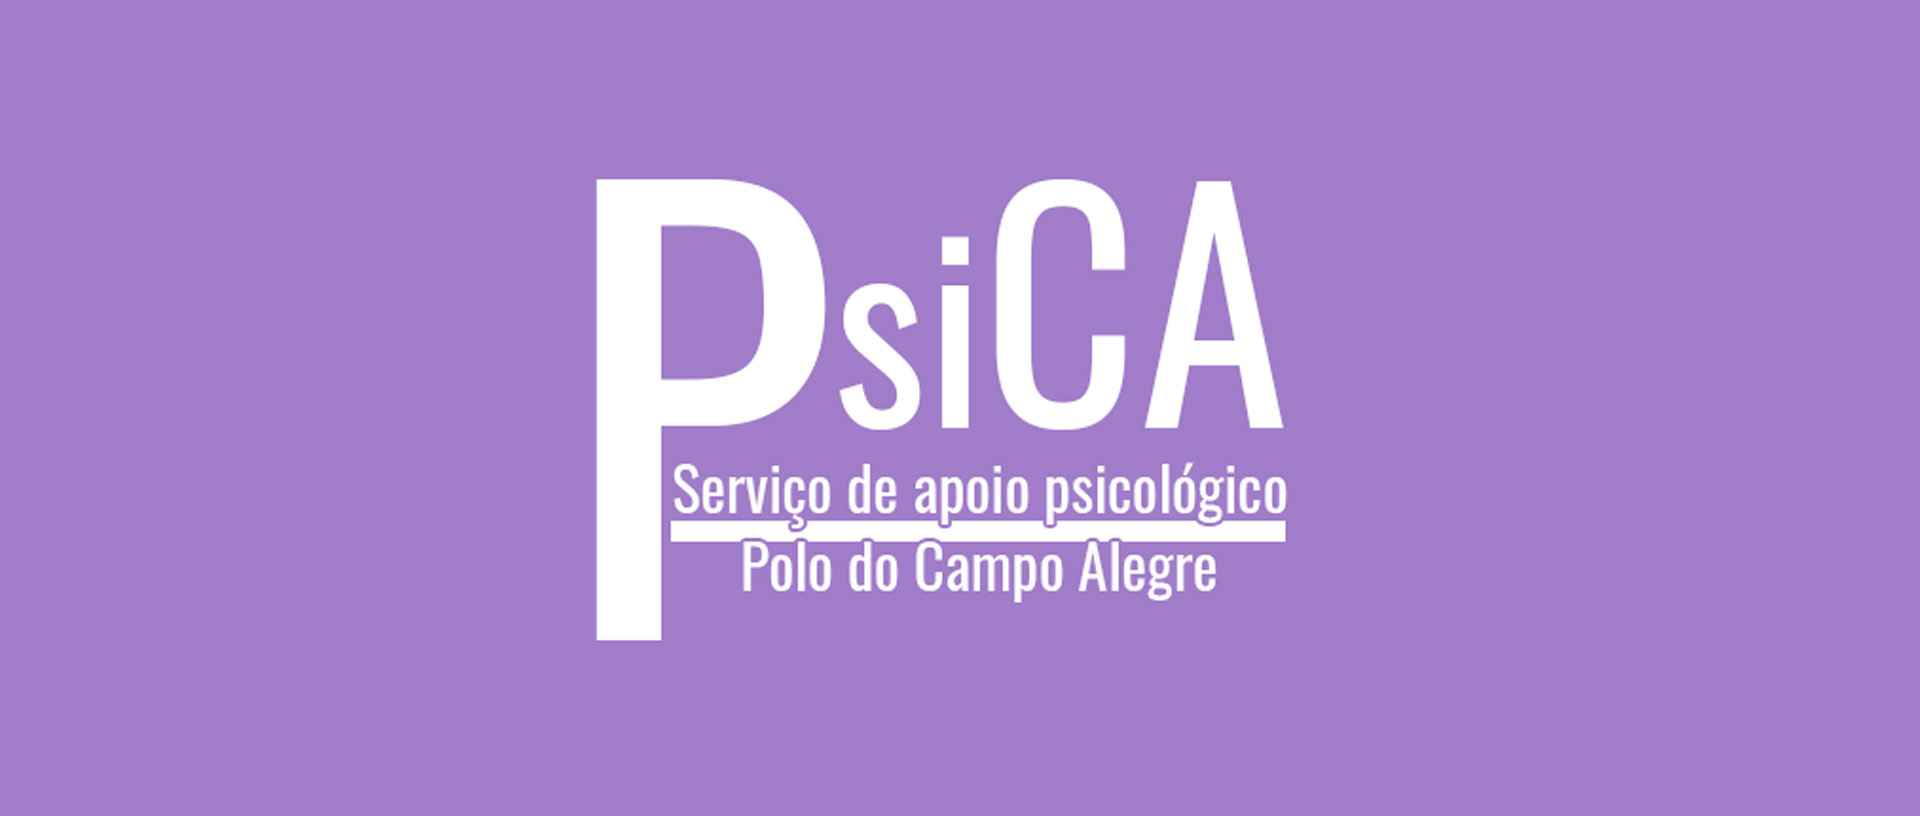 Logótipo do Psica - Serviço de Apoio Psicológico do Polo do Campo Alegre